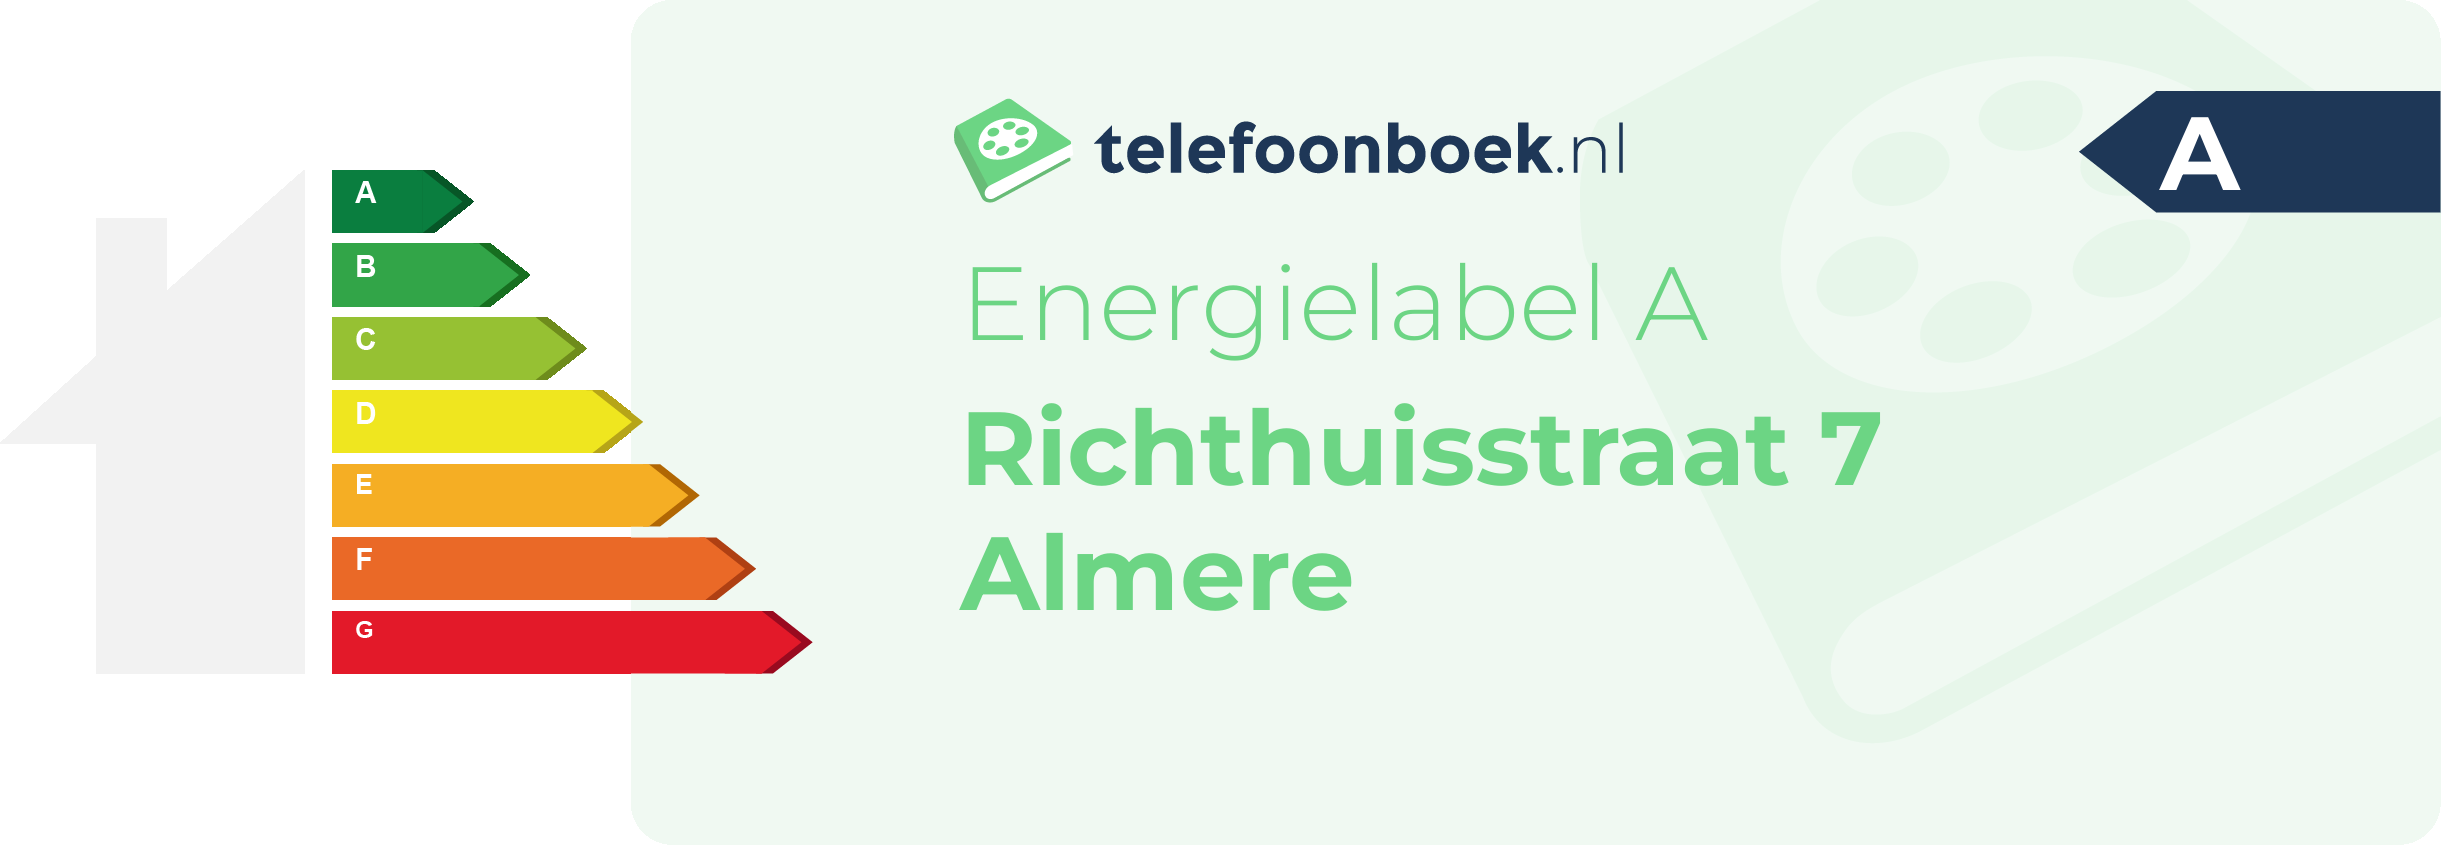 Energielabel Richthuisstraat 7 Almere